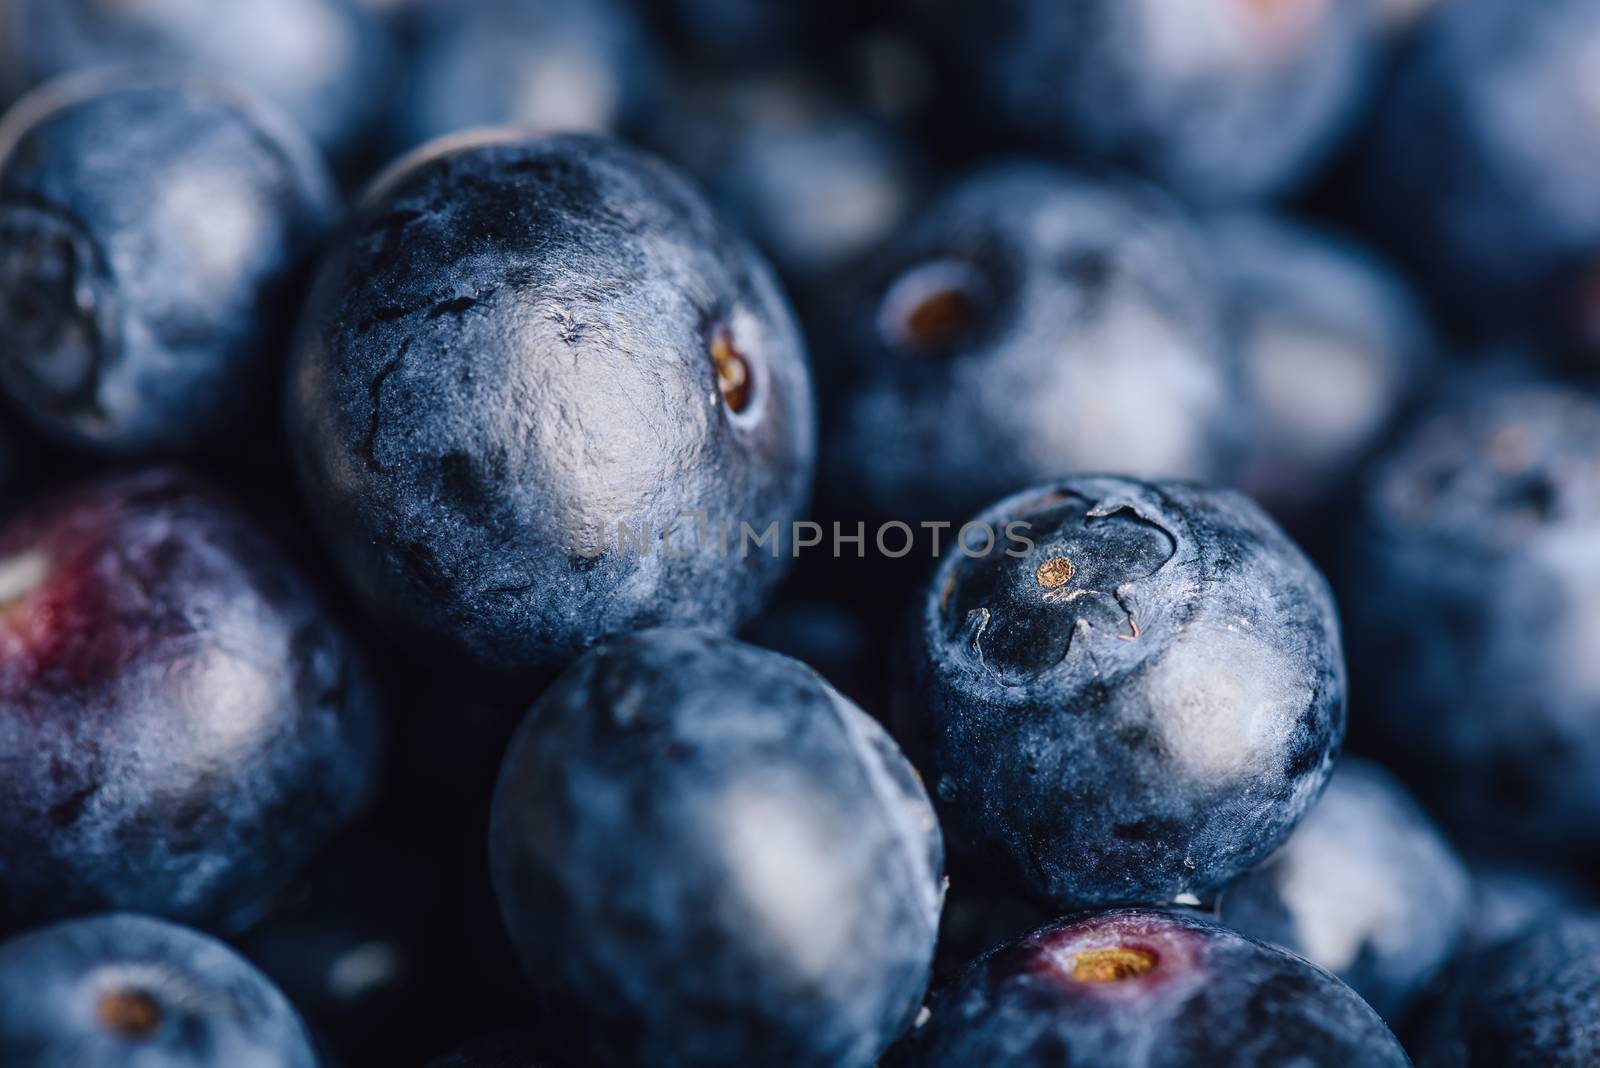 Ripe Blueberry Close Up Background. Horizontal Orientation.